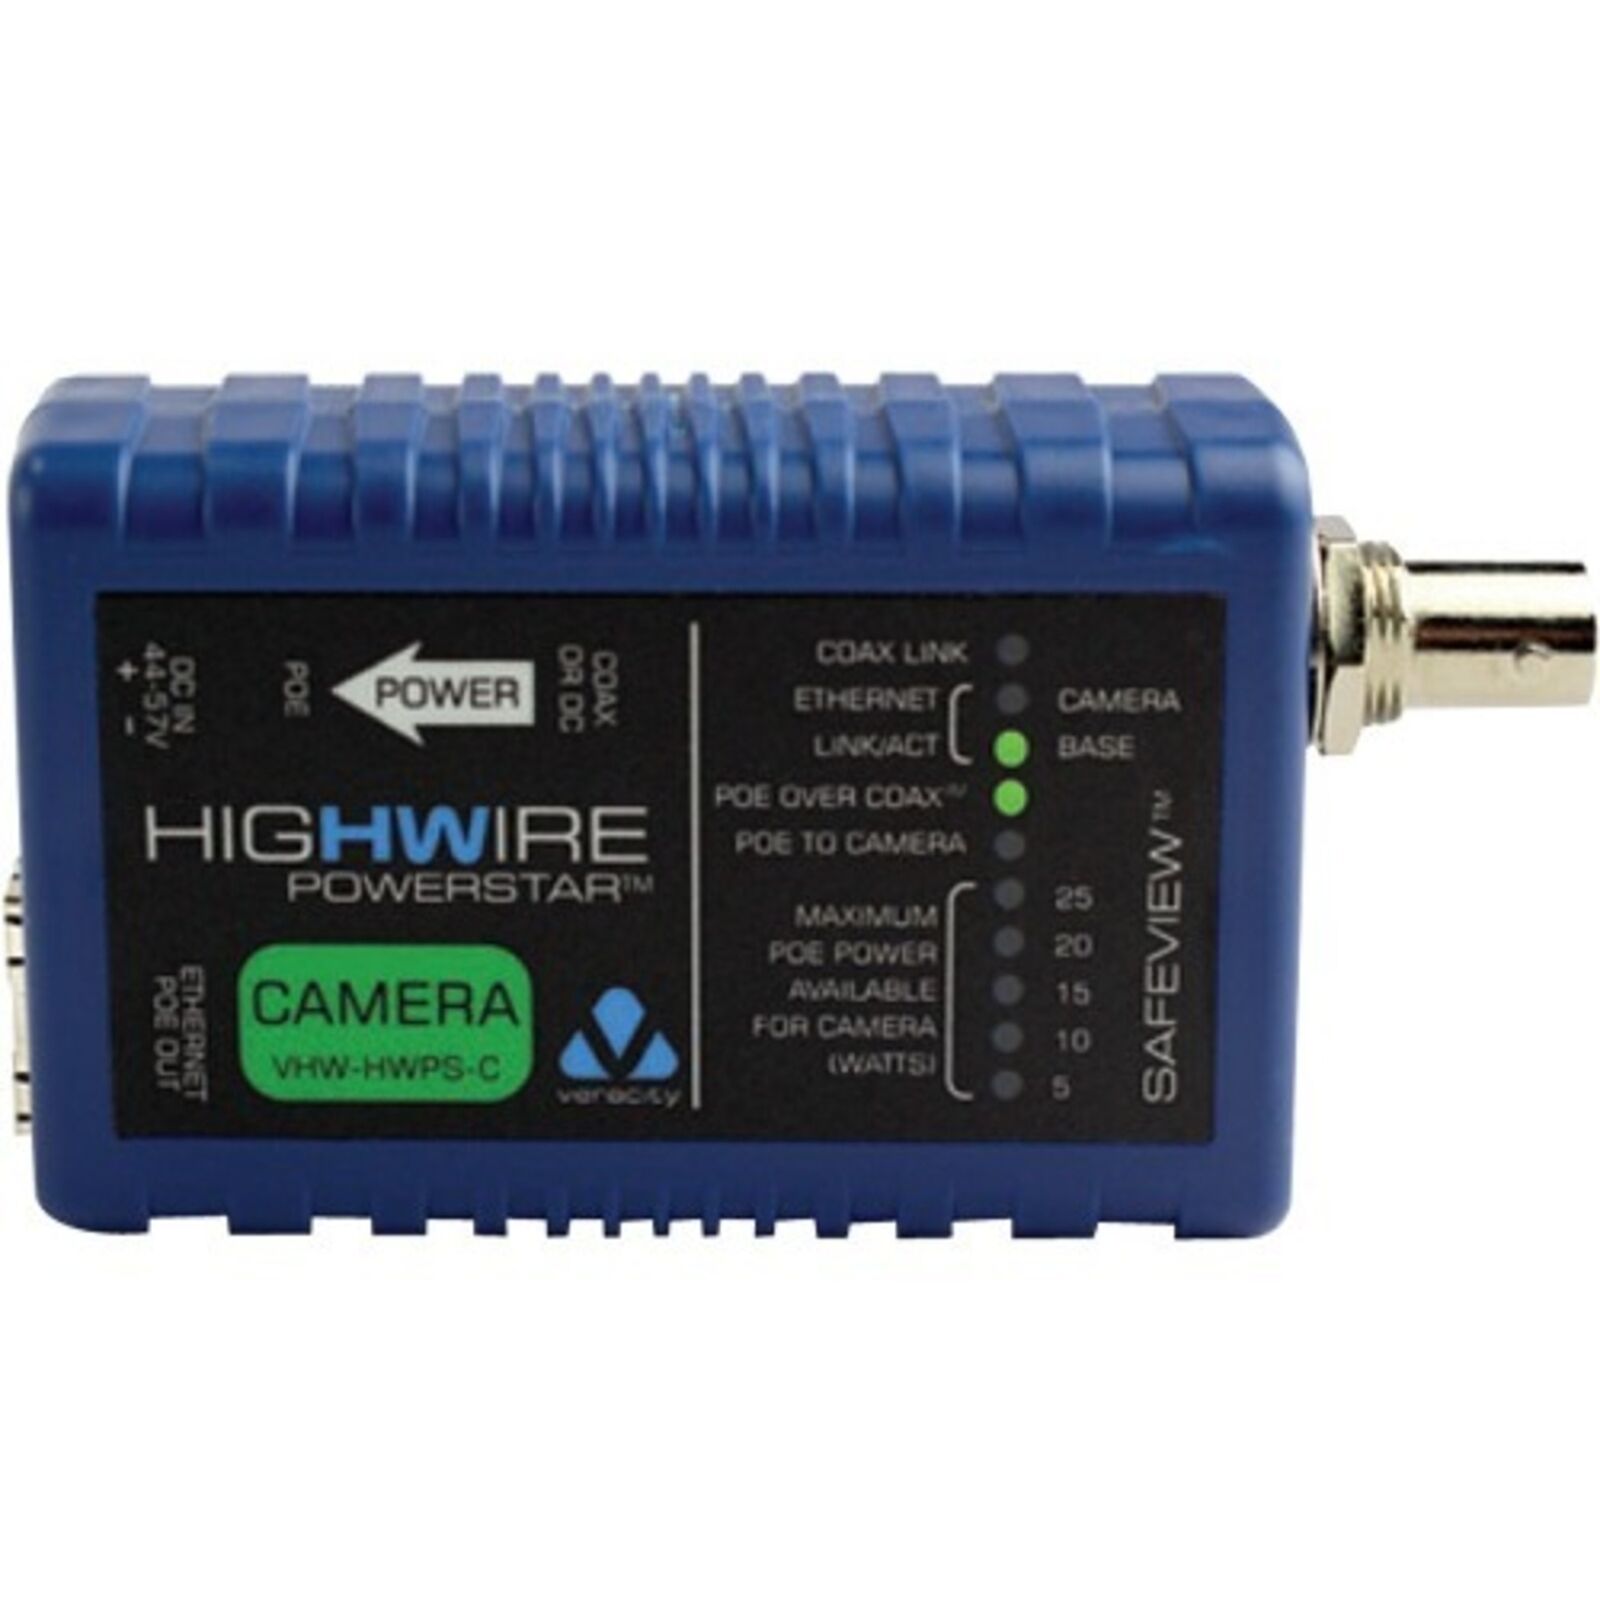 Veracity - VHW-HWPS-C - Veracity HIGHWIRE PowerStar Camera unit - 2.1 Width x